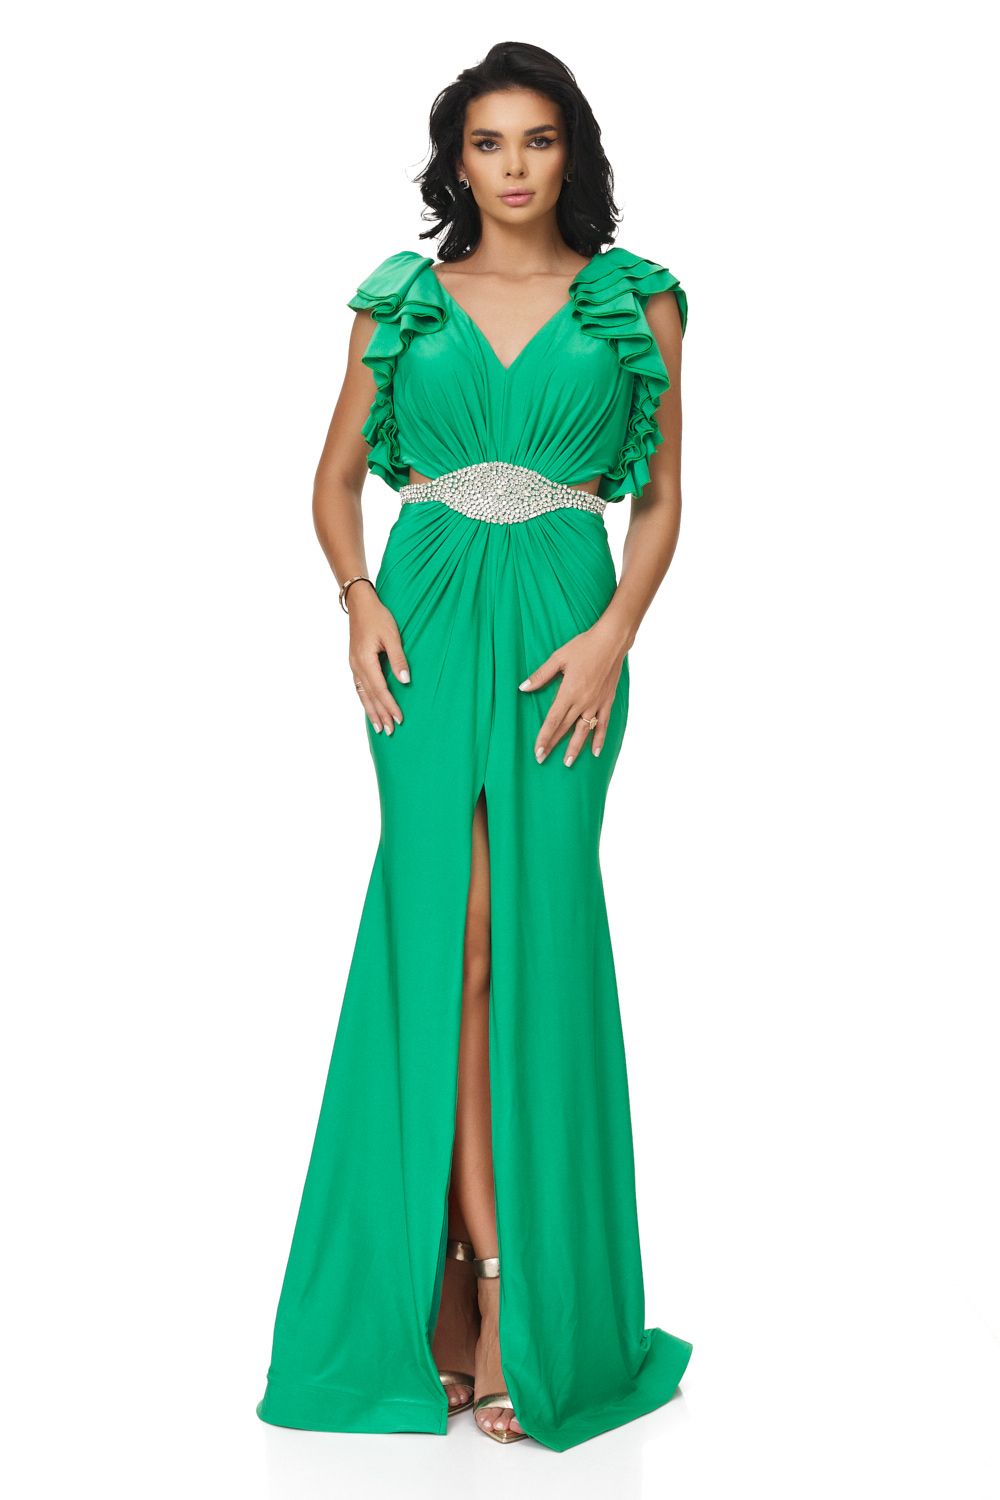 Helisay Bogas hosszú zöld női ruha